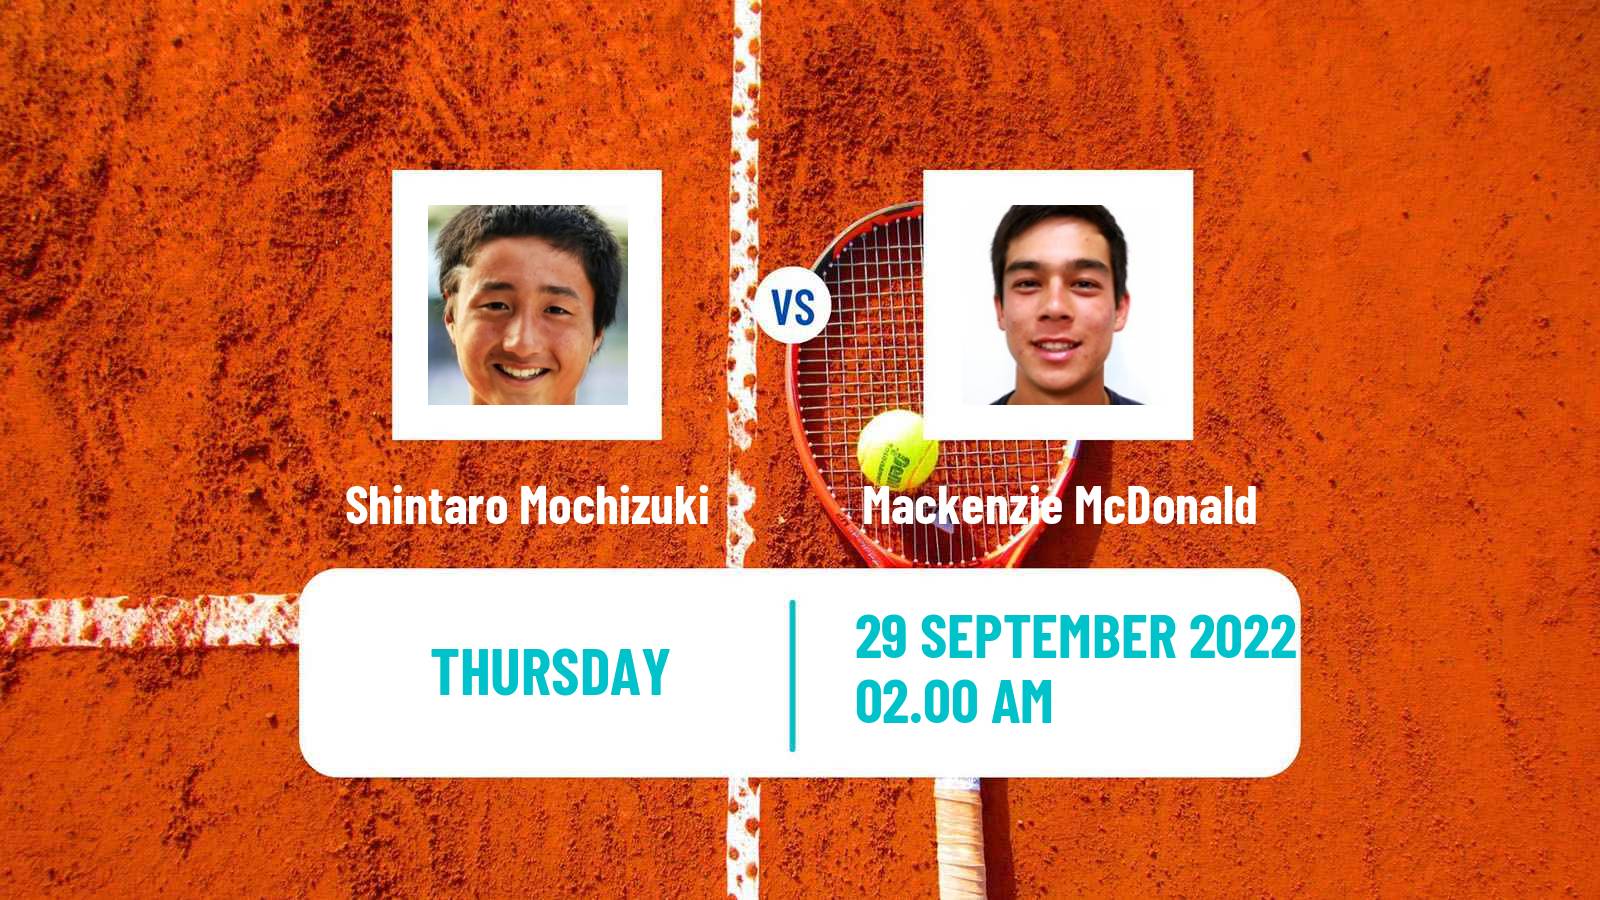 Tennis ATP Seoul Shintaro Mochizuki - Mackenzie McDonald